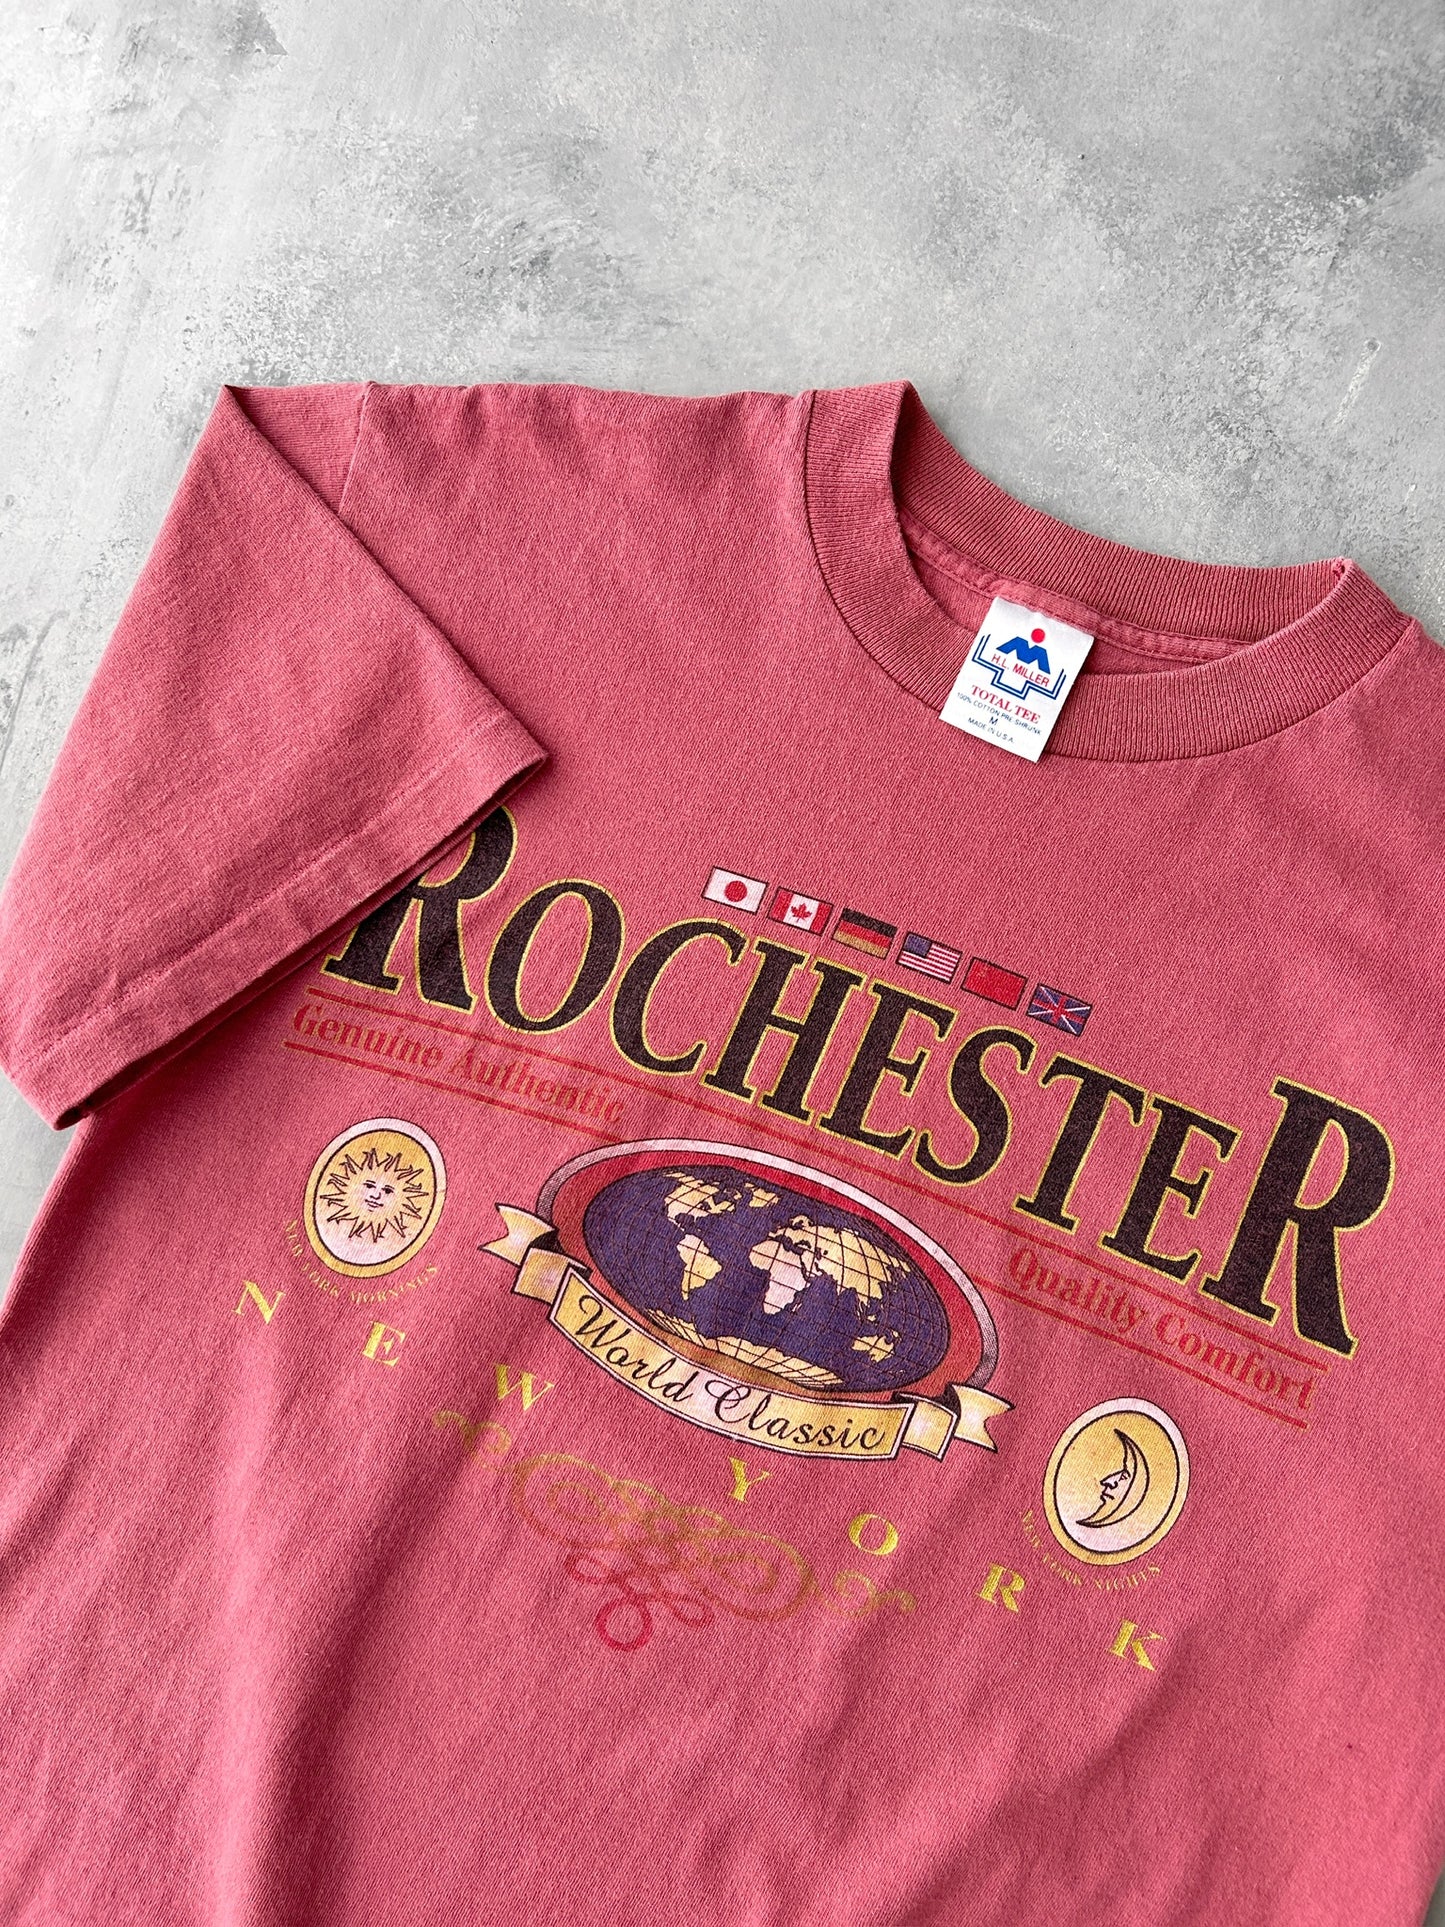 Rochester NY T-Shirt 90's - Medium